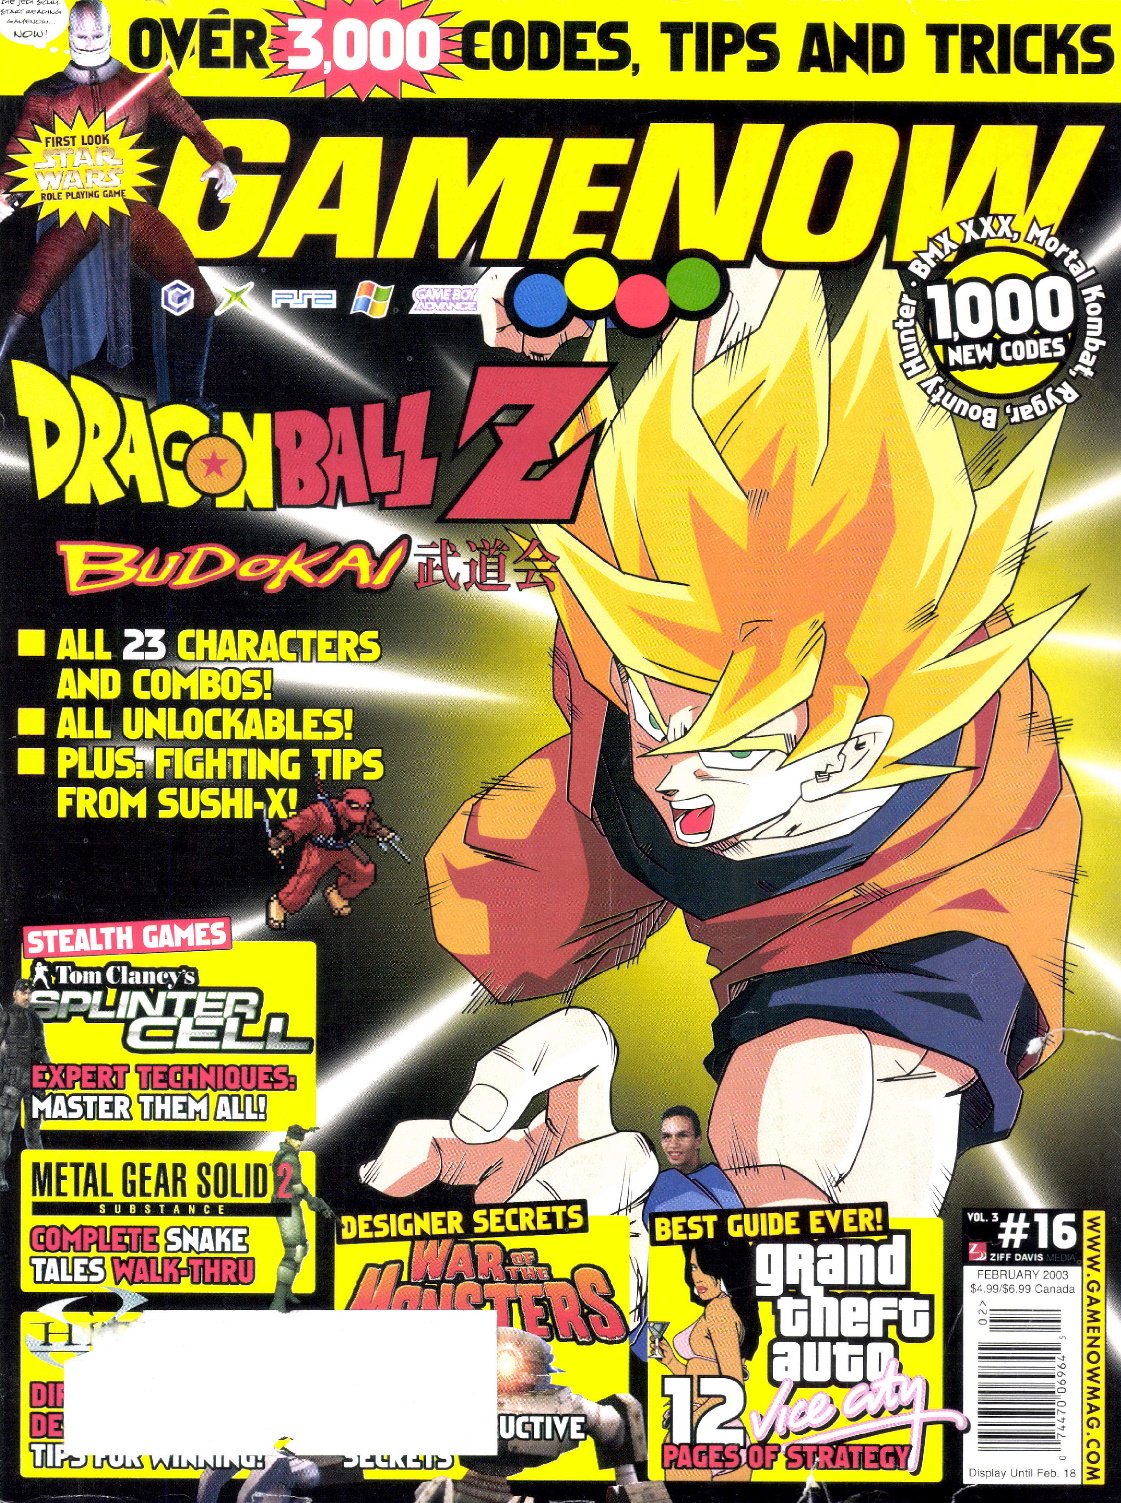 GameNOW Issue 16 (February 2003)